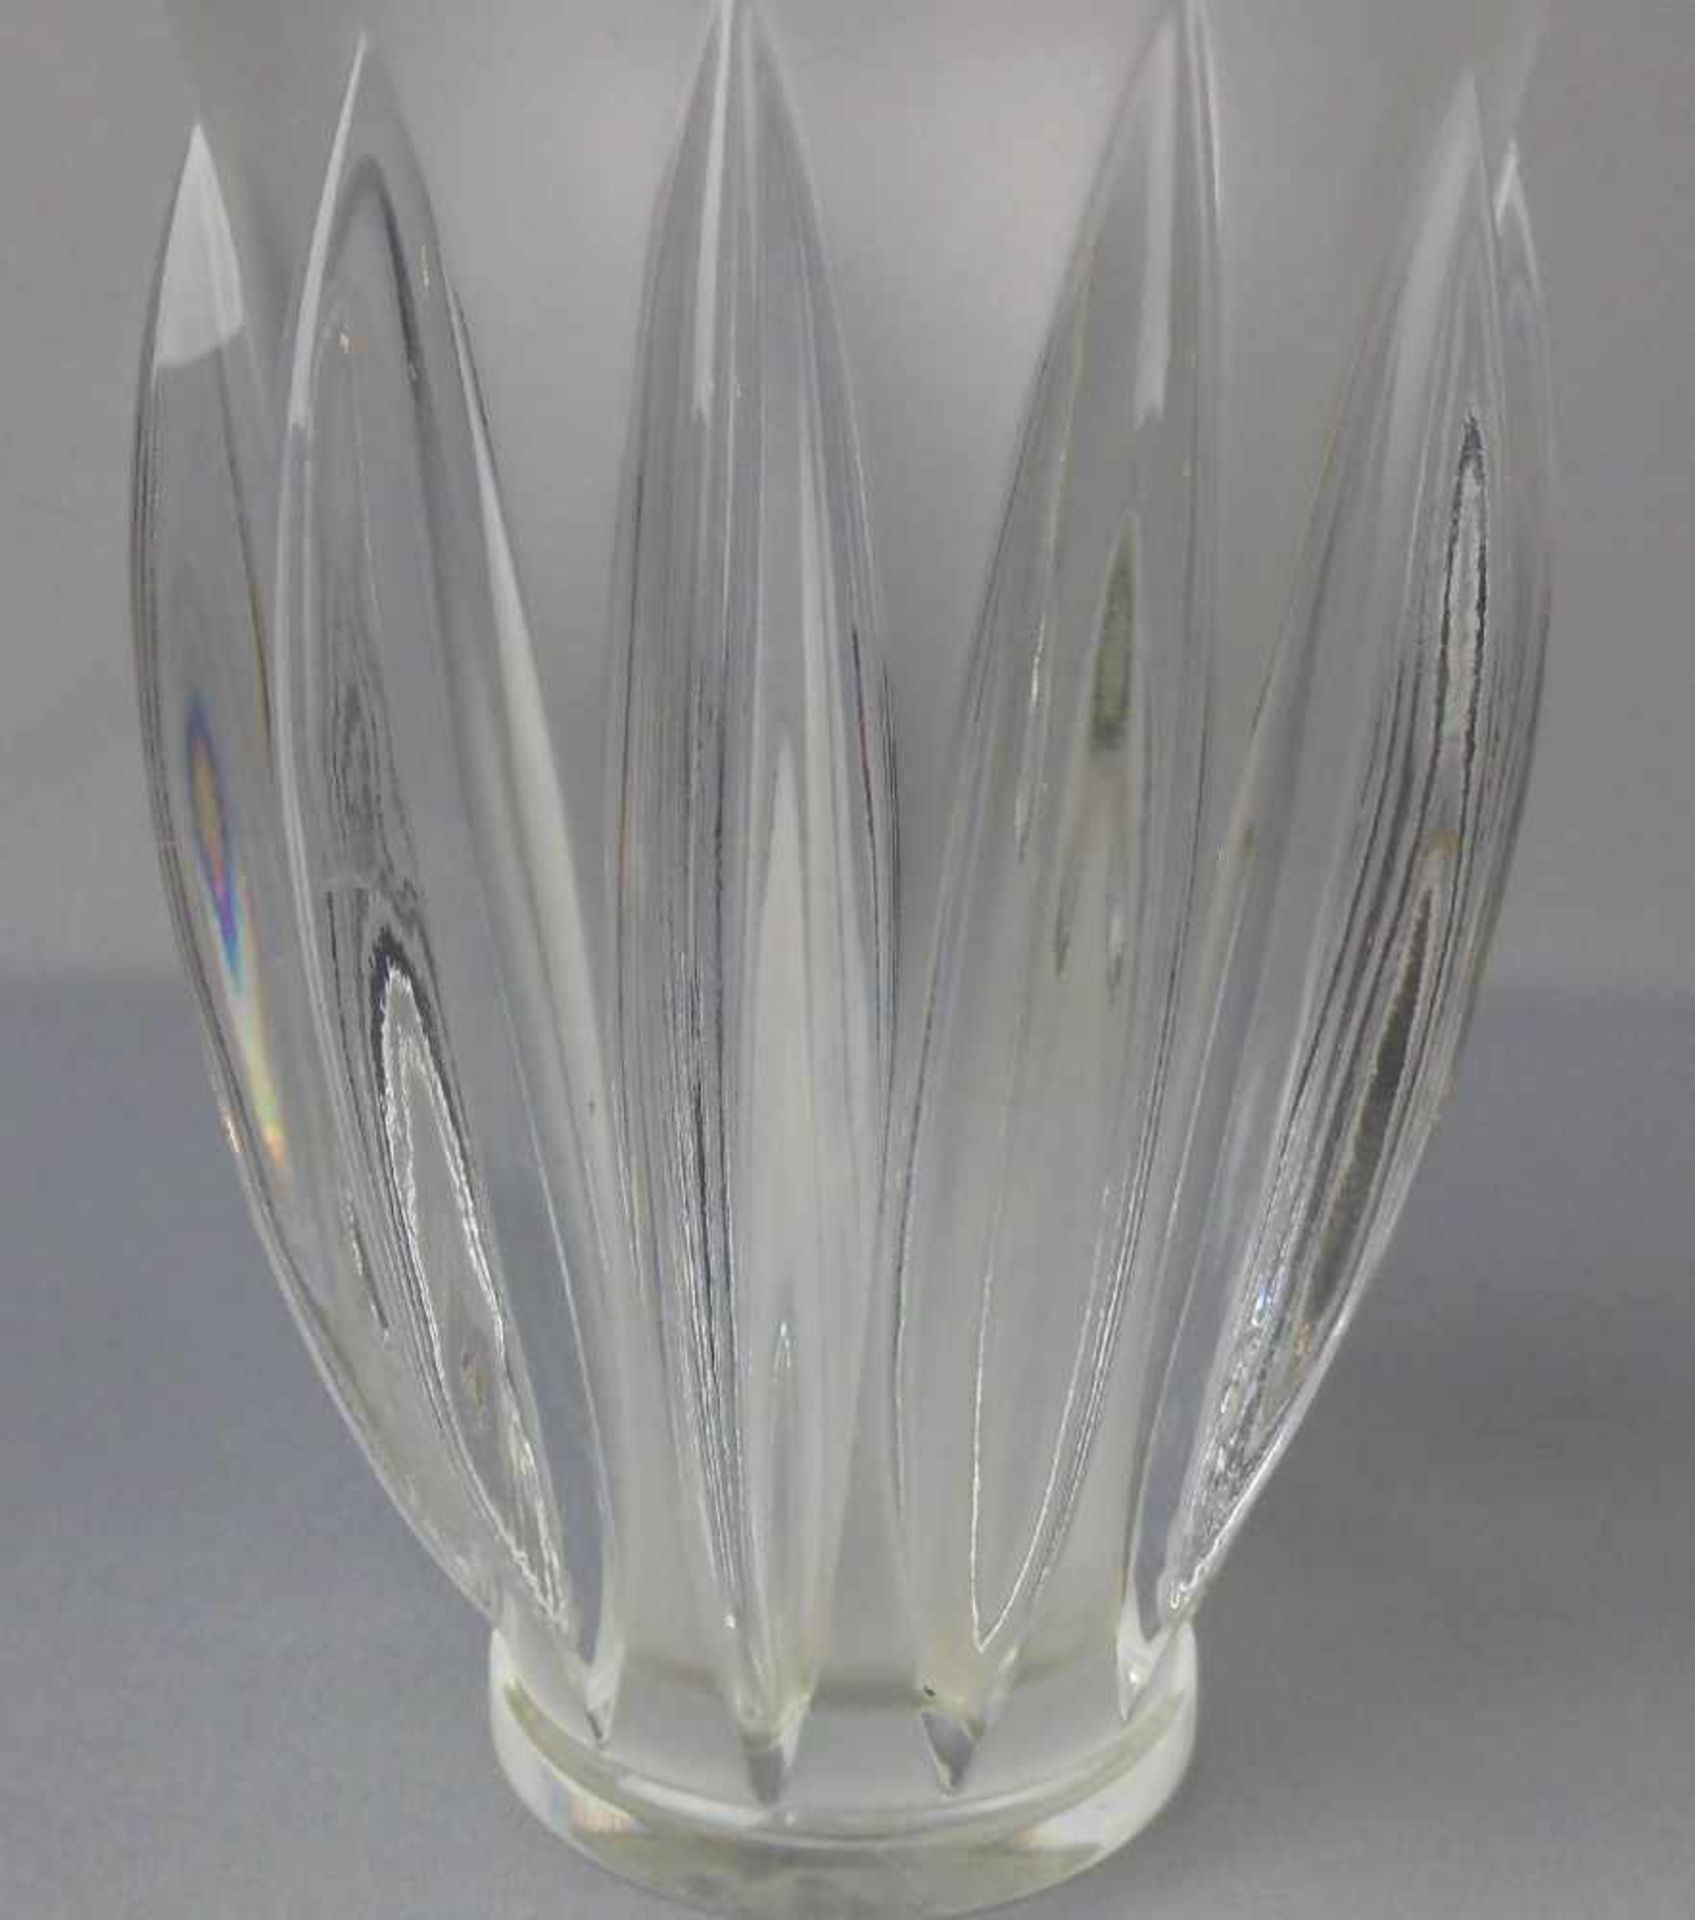 LALIQUE - VASE / glass vase, Kristallglas, partiell satiniert, unter dem Stand mit Nadelsignatur " - Image 2 of 5